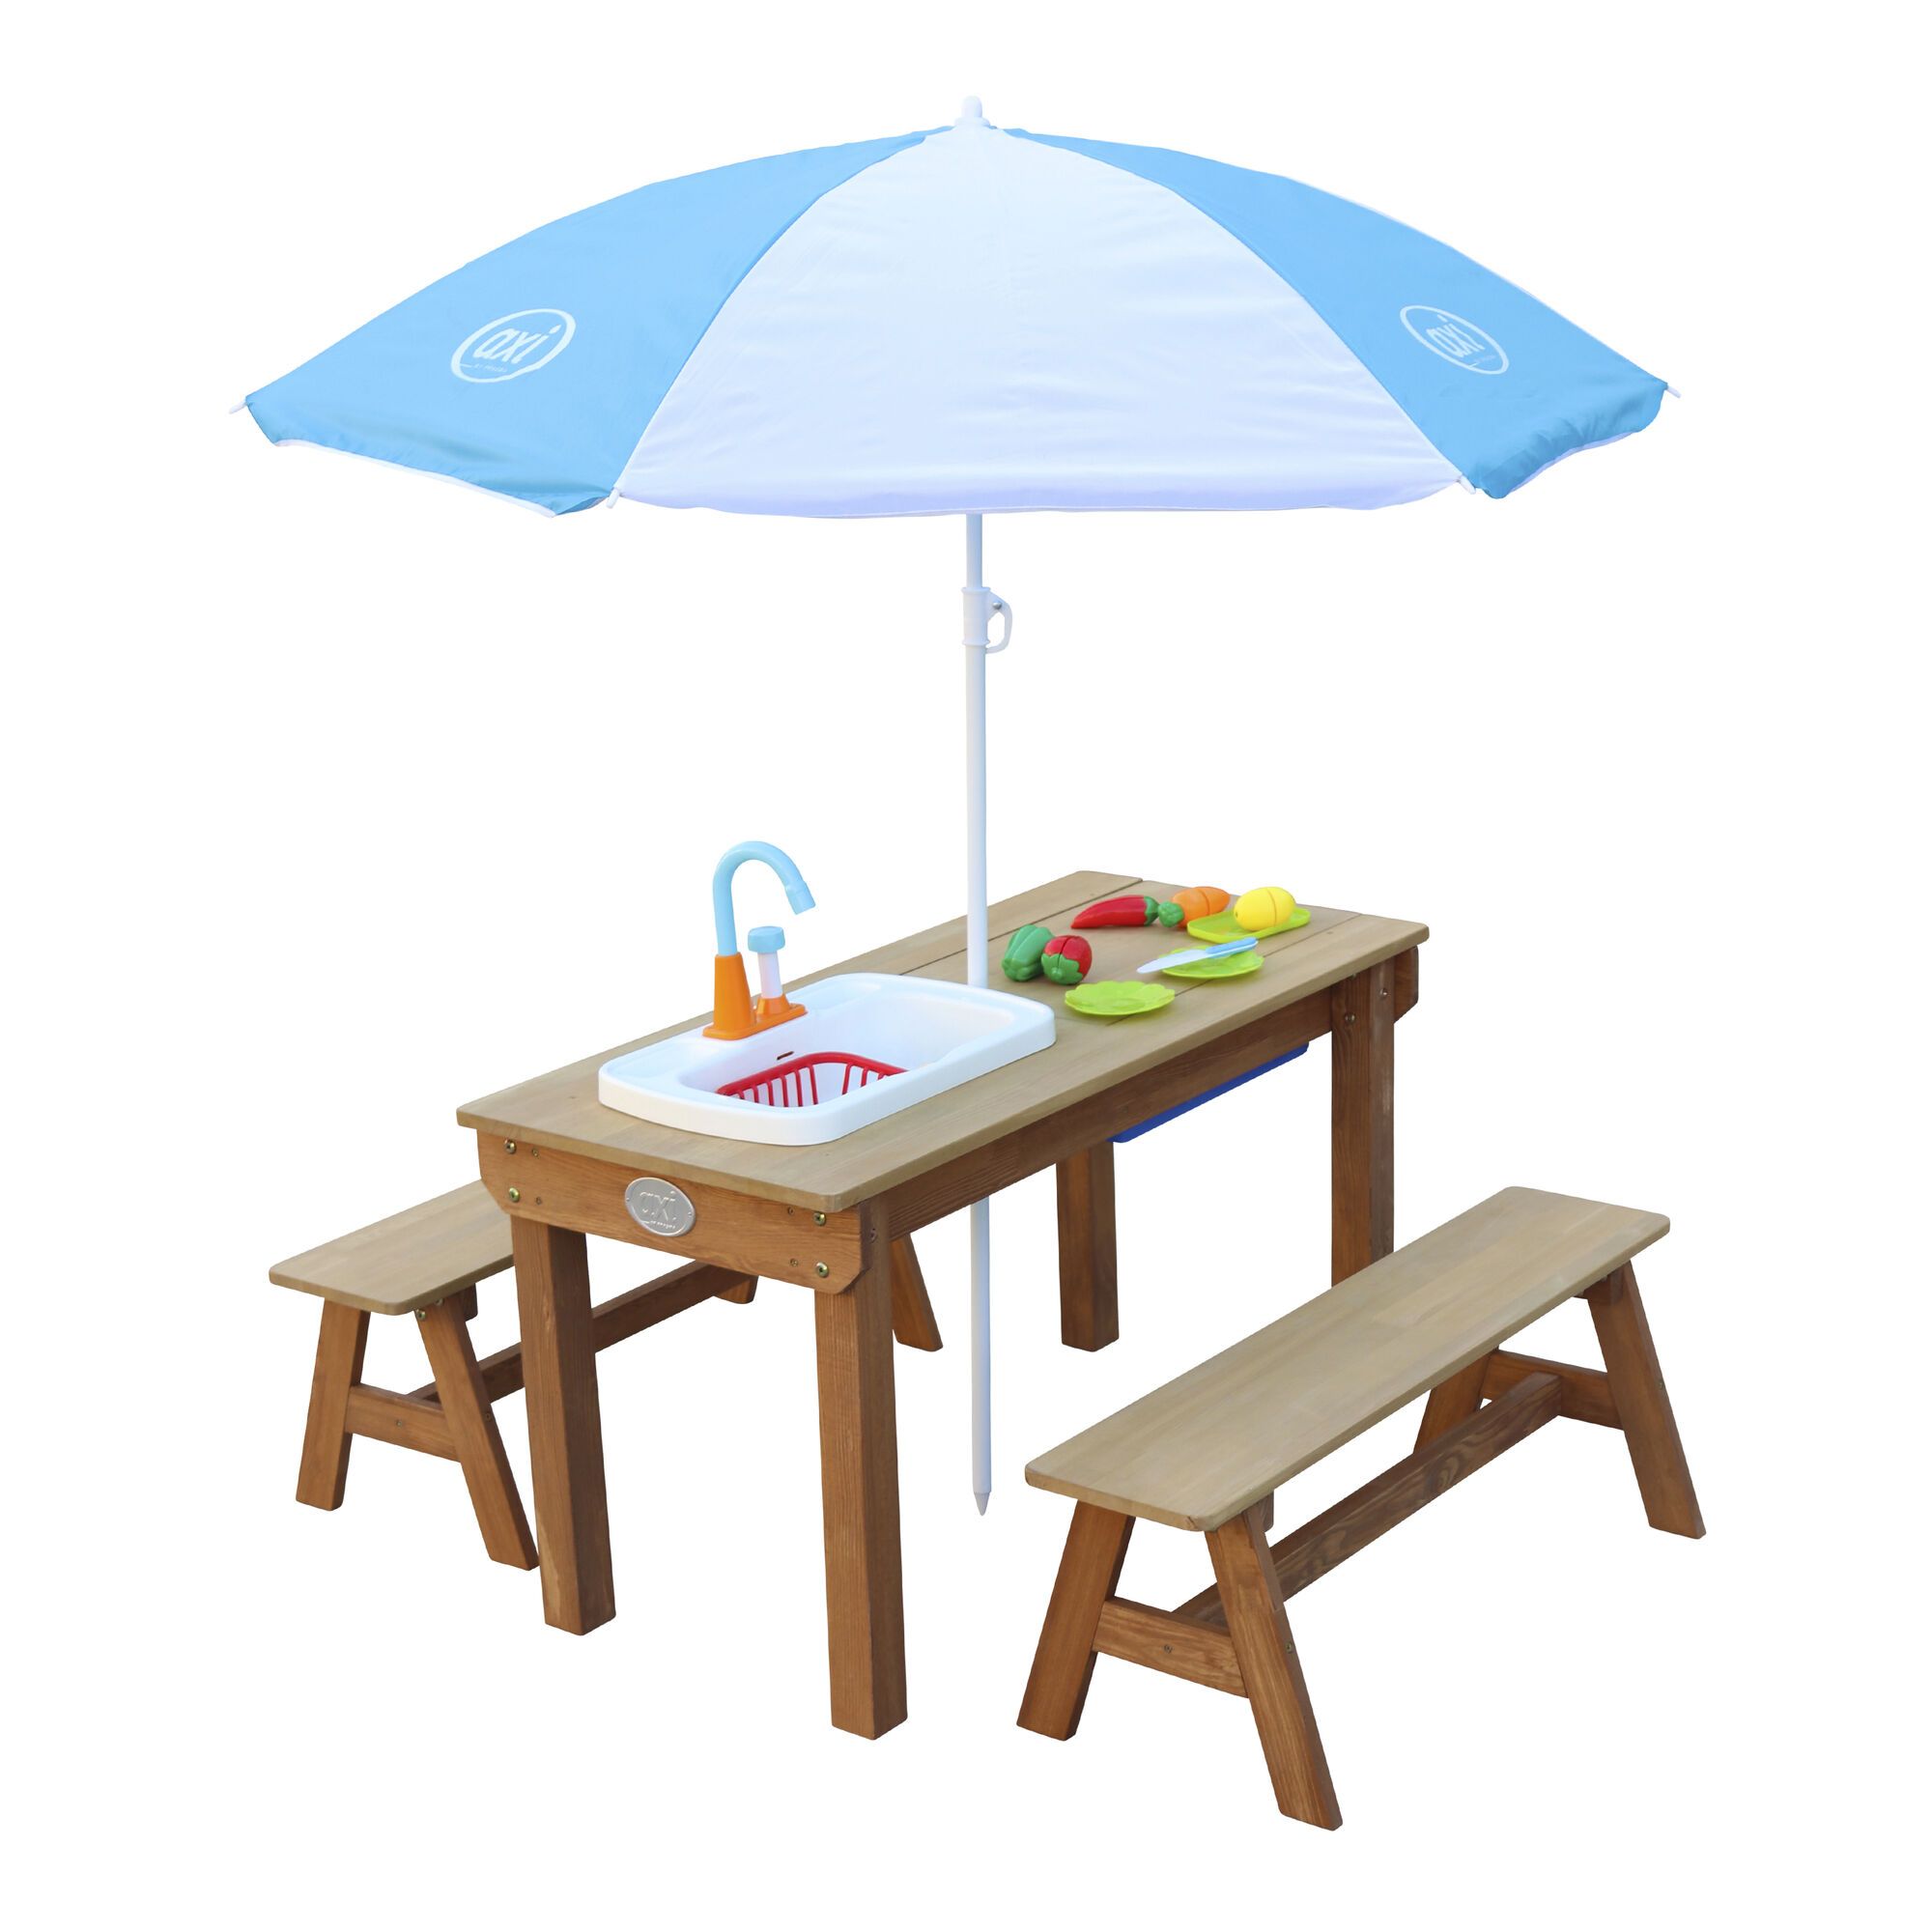 AXI Dennis Zand & Water Picknicktafel met Speelkeuken wastafel en losse bankjes Bruin - Parasol Blauw/wit